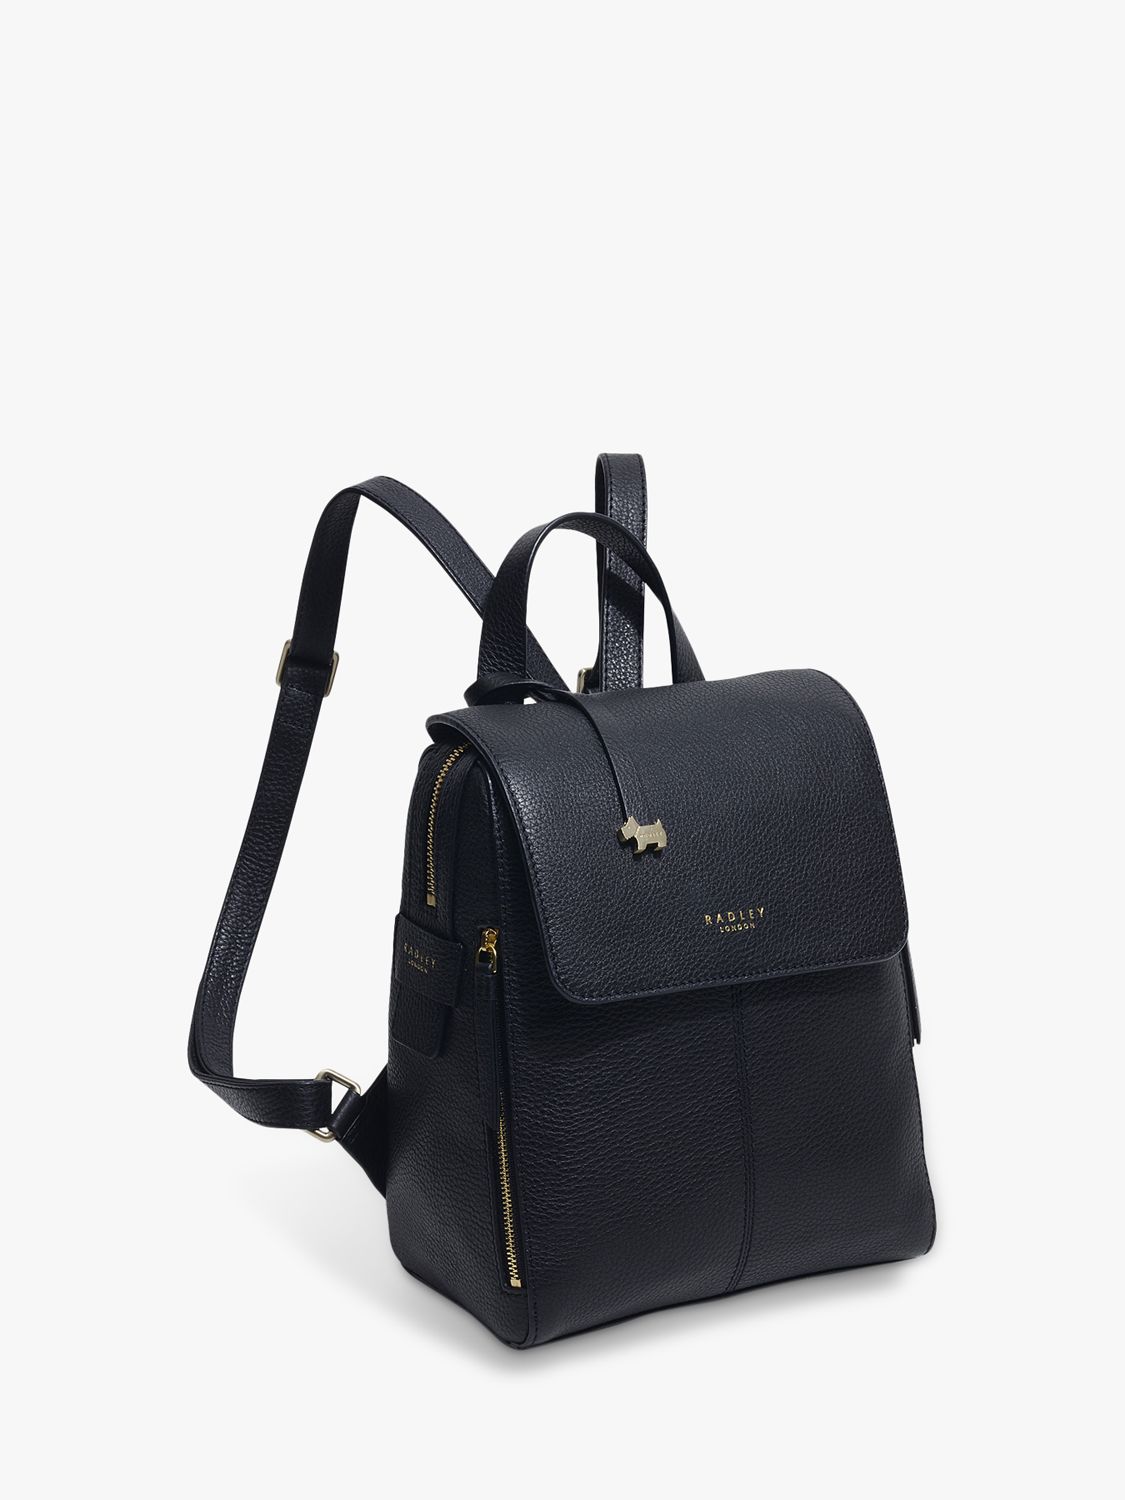 Radley Lorne Close Medium Leather Backpack, Black at John Lewis & Partners